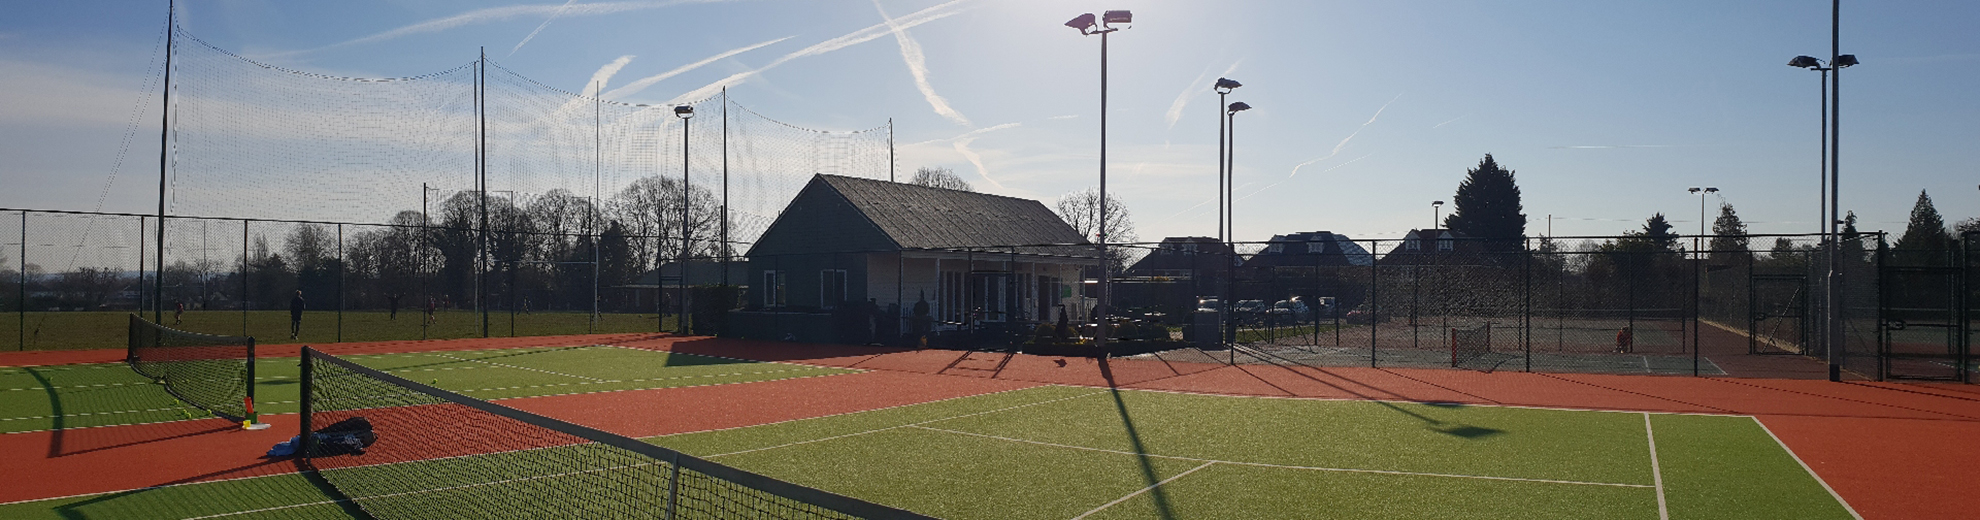 Croxley Tennis Club - Welcome